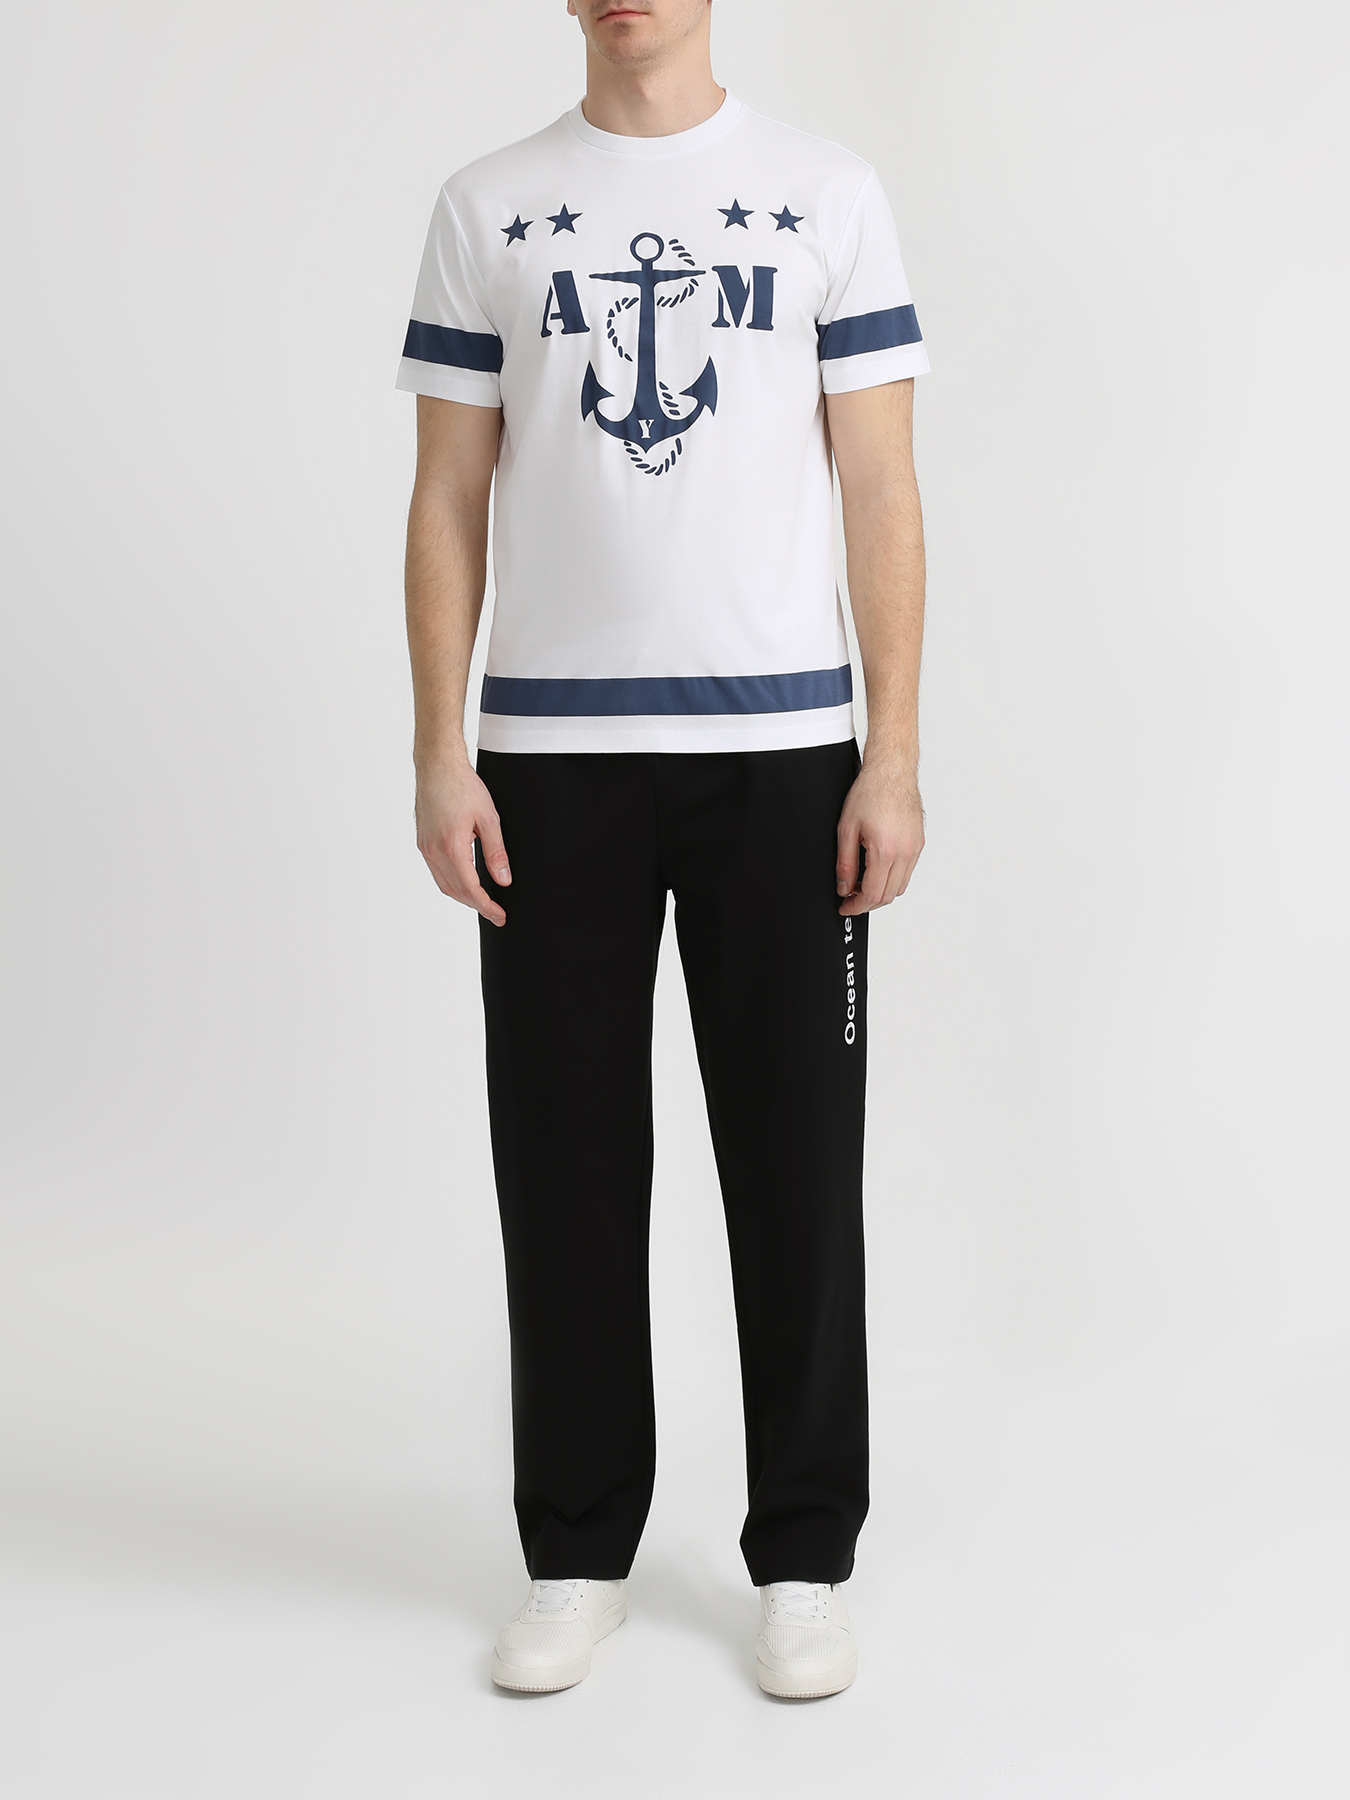 Alessandro Manzoni Yachting Хлопковая футболка с узорами 332051-025